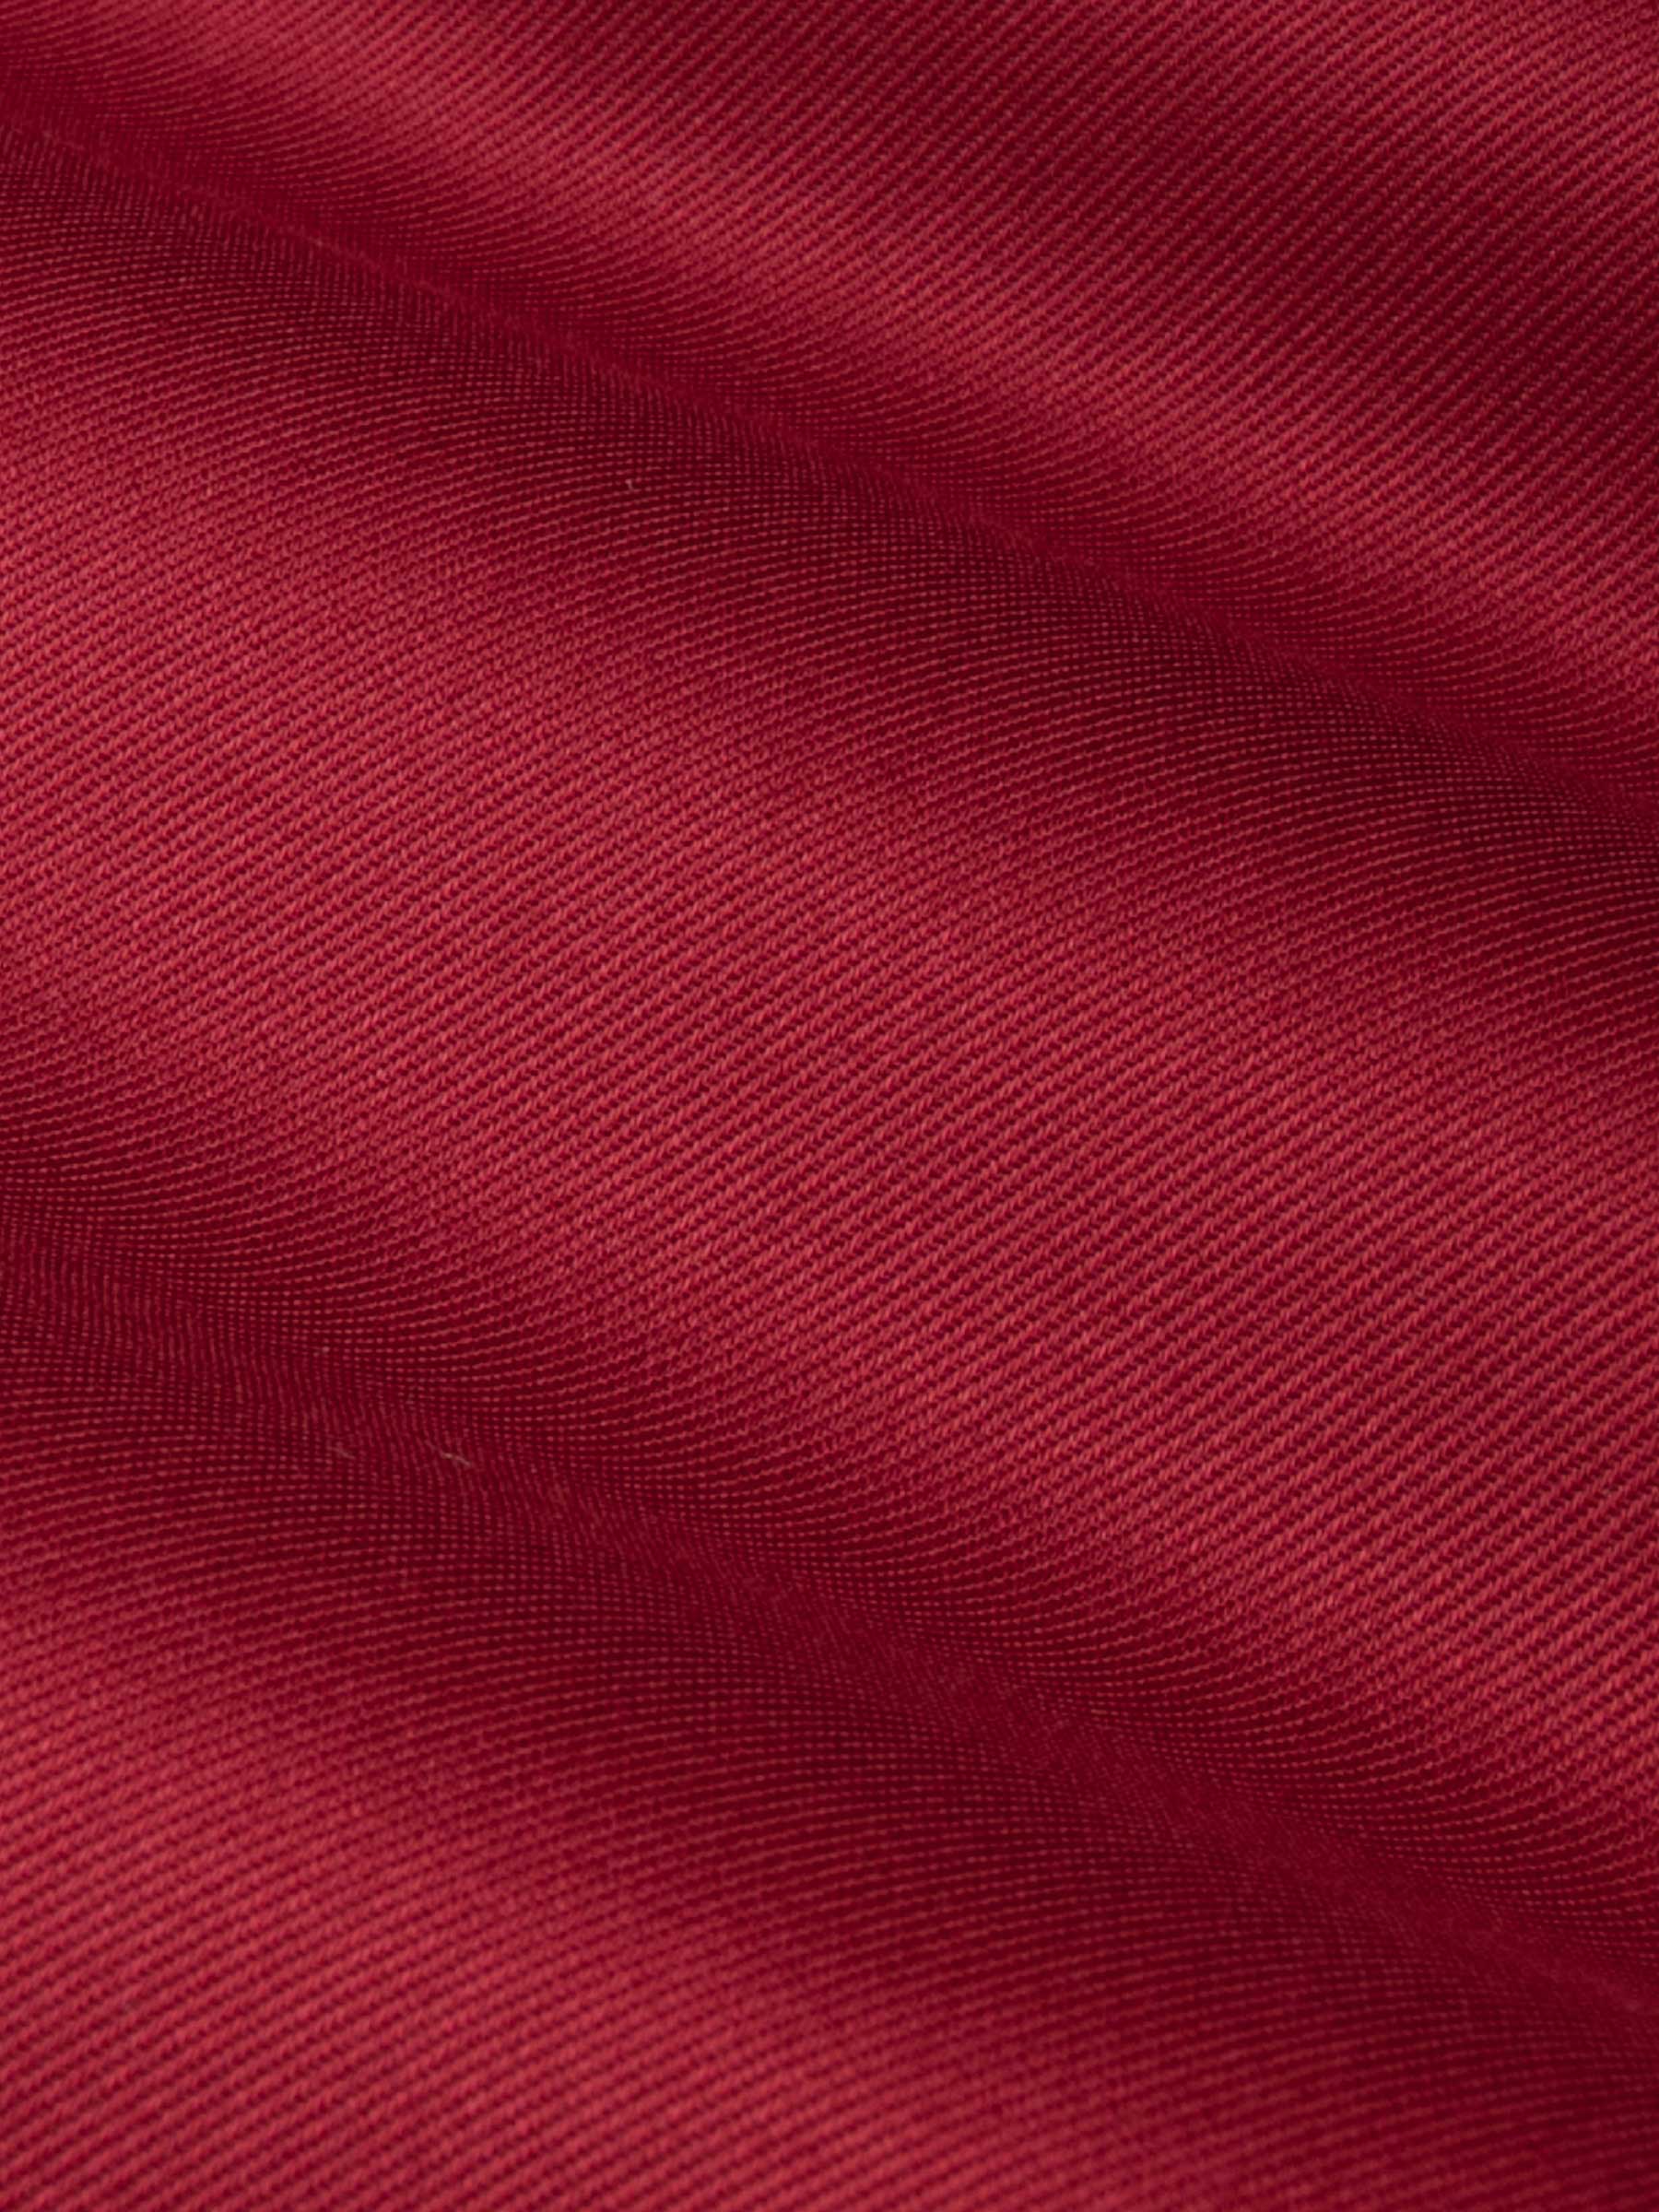 Lance Solid Red Overhemd Lange Mouw-XL